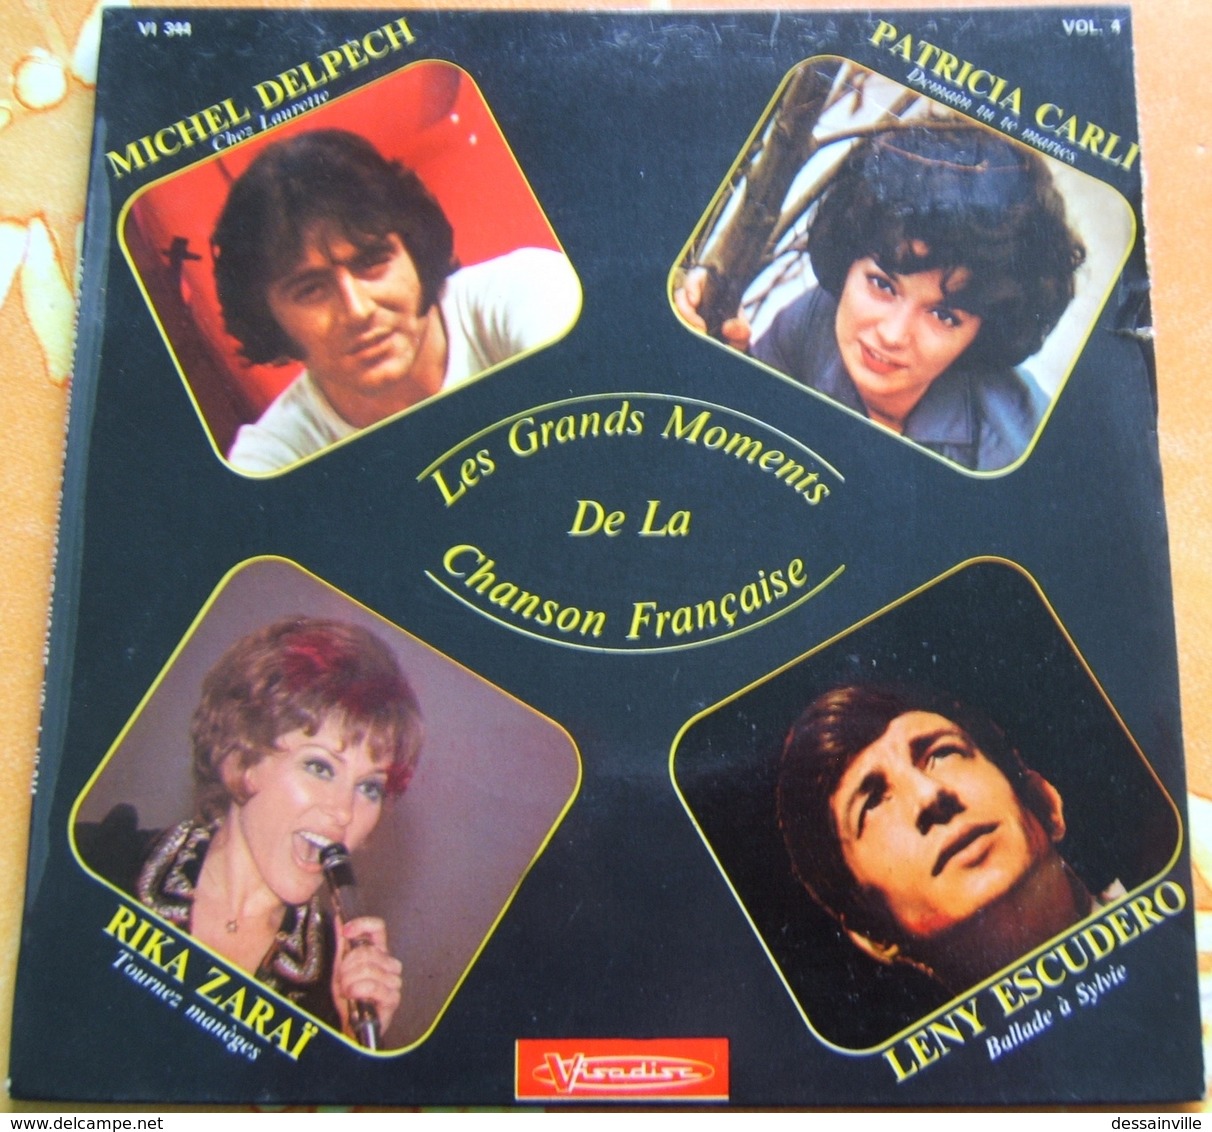 45 Tours VOLUME 4 - GRANDS MOMENTS CHANSON FRANCAISE - DELPECH CARLI ZARAÏ ESCUDERO - Hit-Compilations